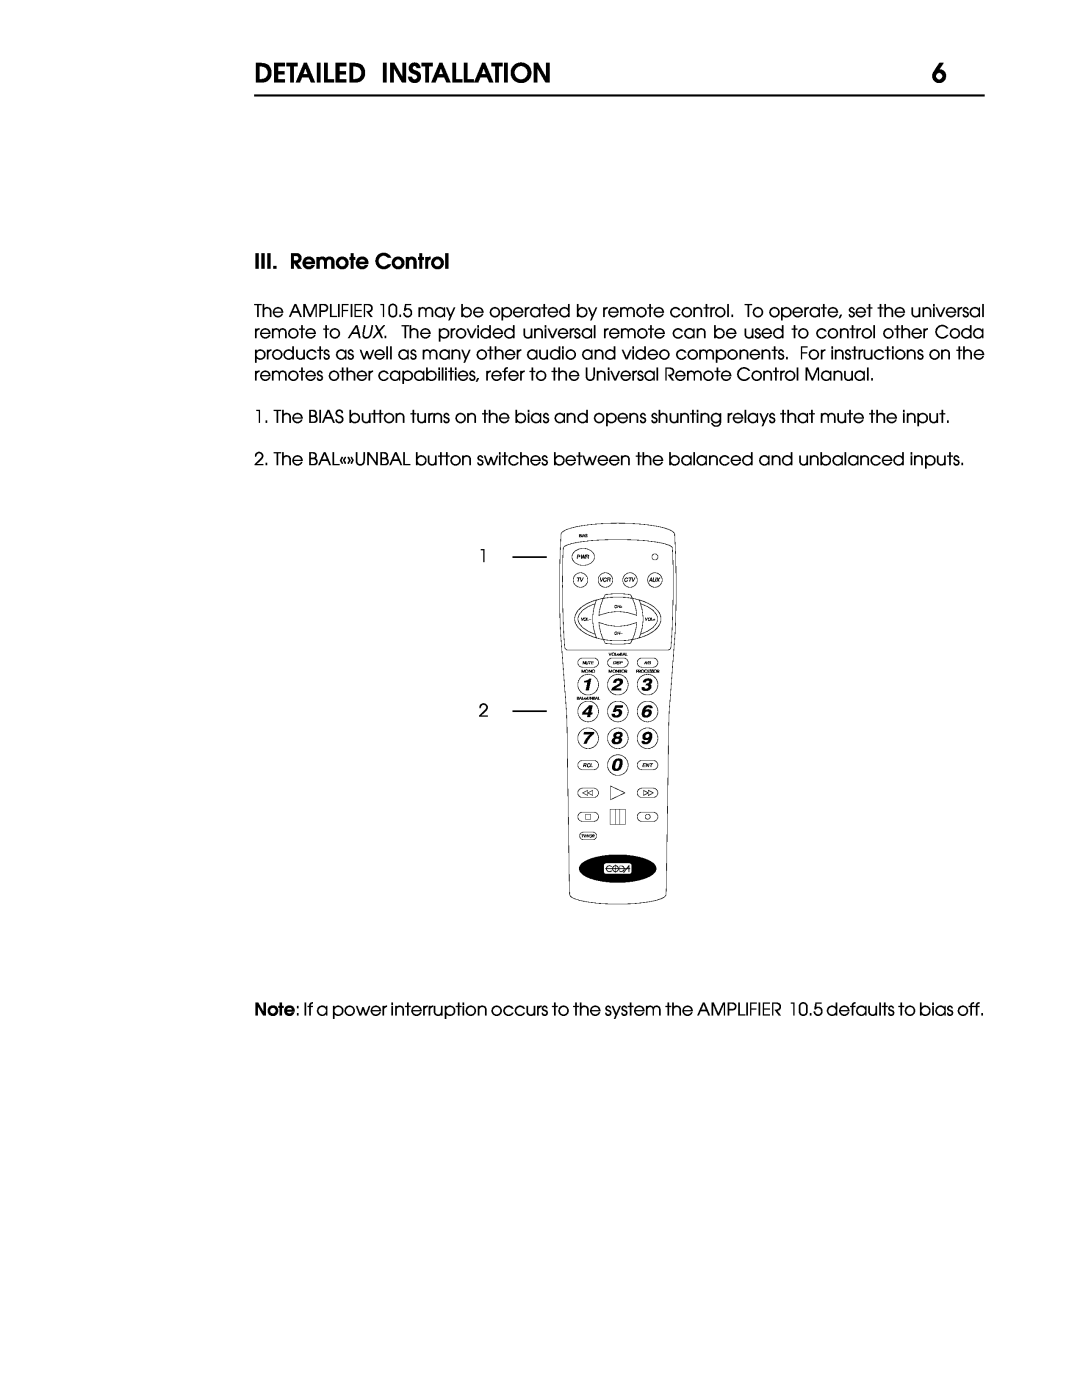 Coda 10.5 operation manual Detailed Installation, III. Remote Control 